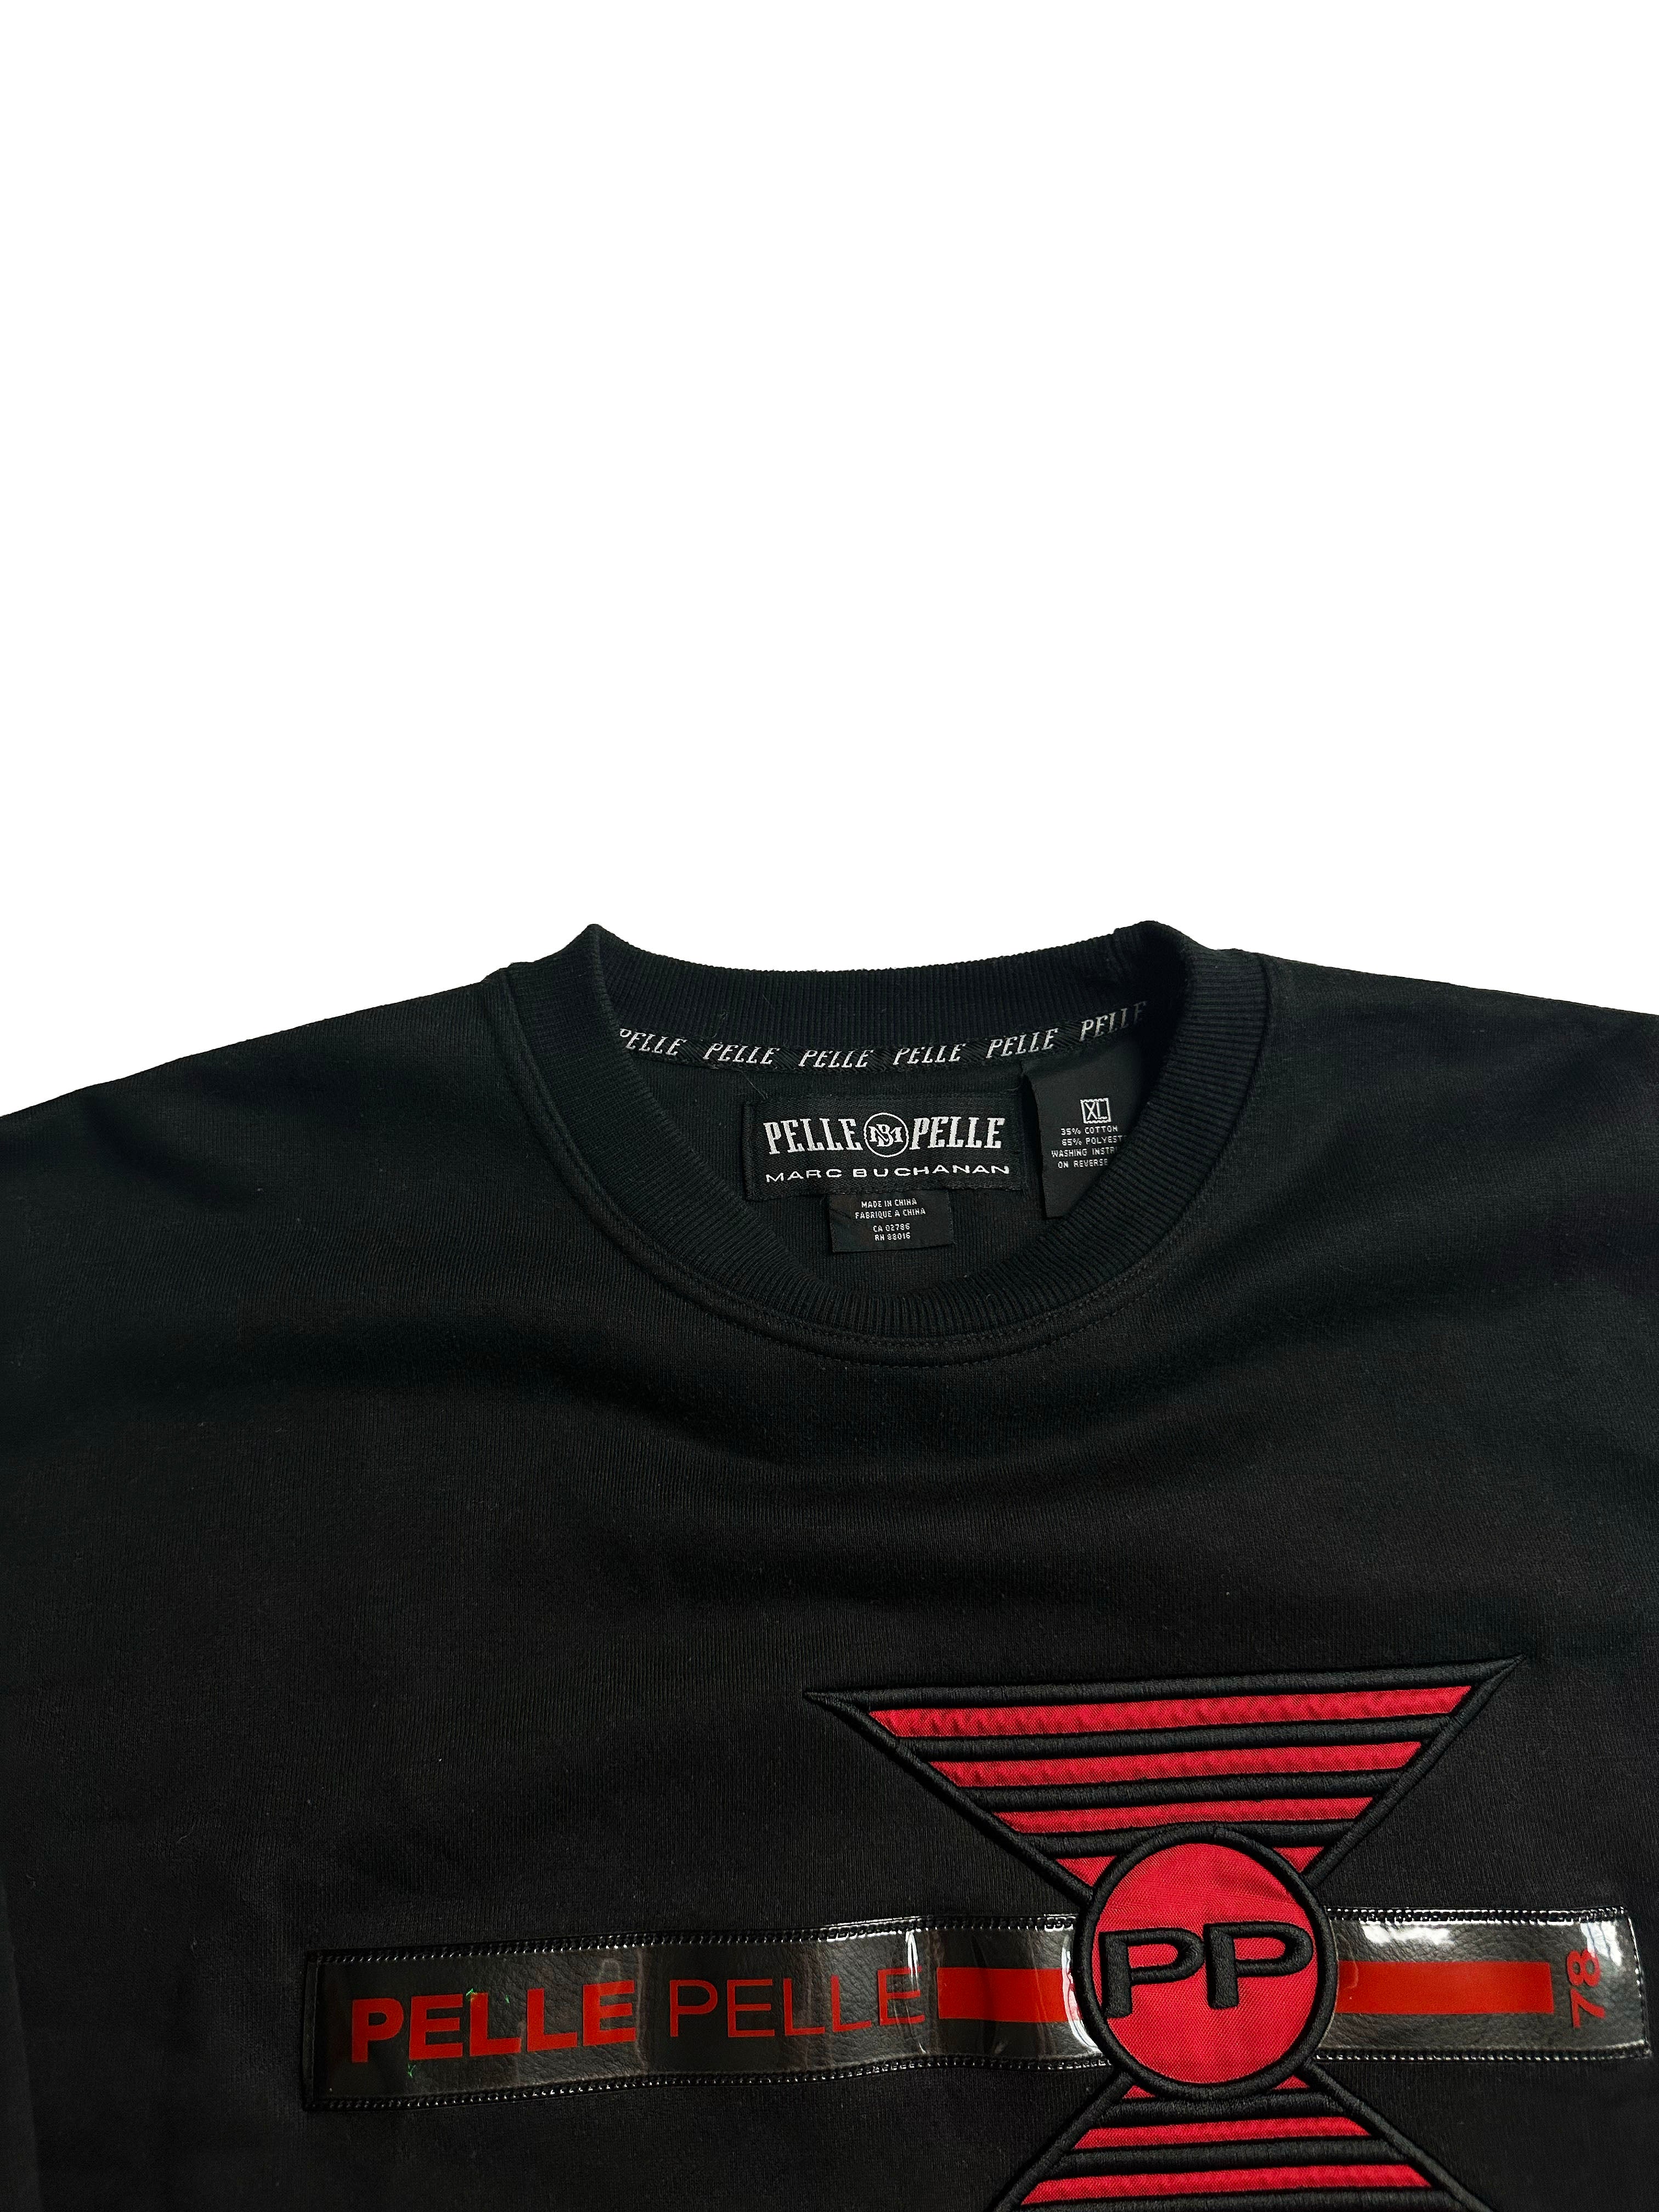 Pelle Pelle Black & Red Spell Out Black Sweatshirt 90's